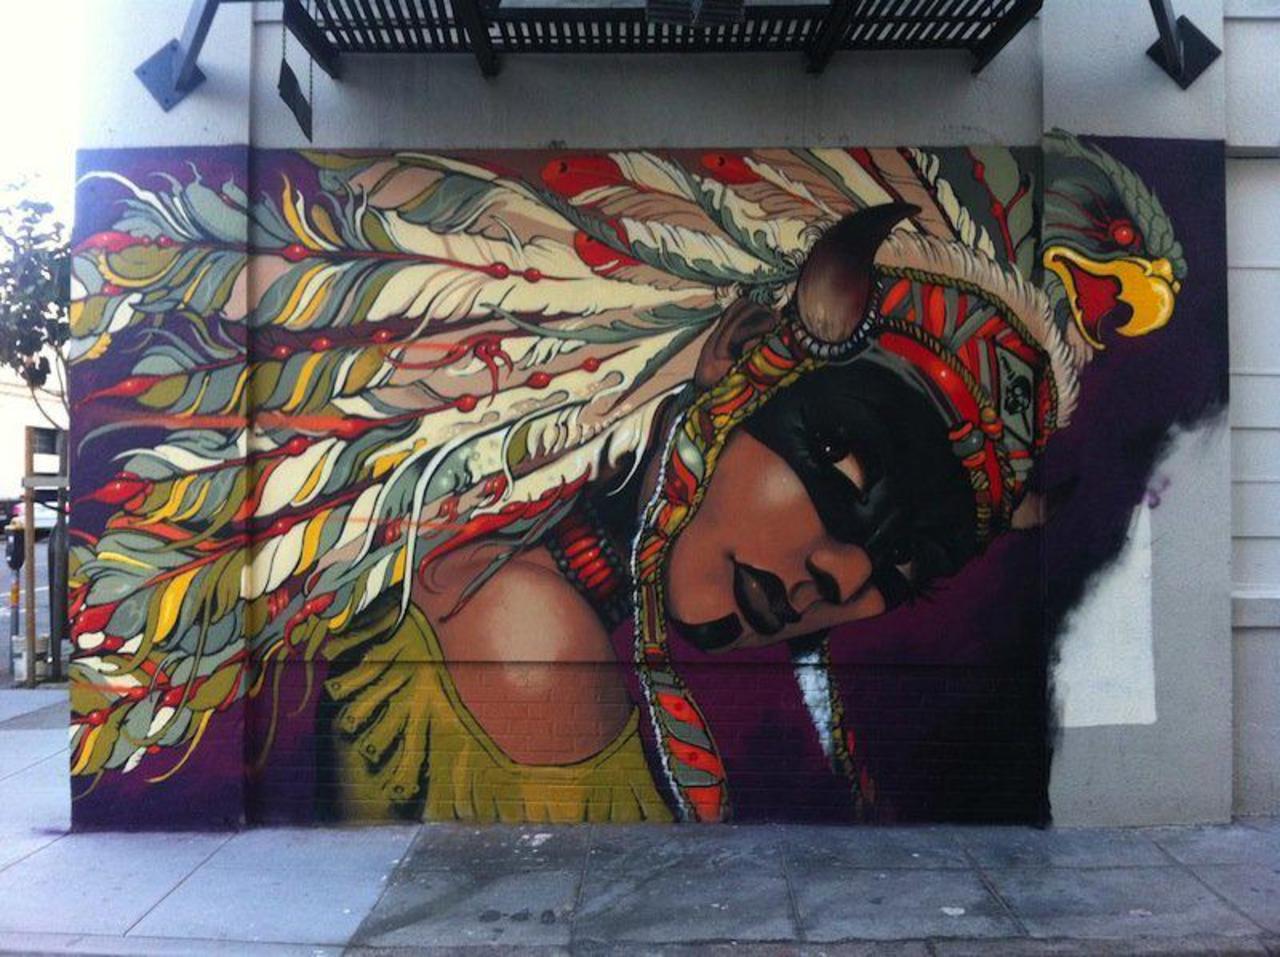 War bonnet. Find more amazing #graffiti in our gallery: http://bit.ly/1GPAOAT #mural #art https://t.co/IrX8IweeQt